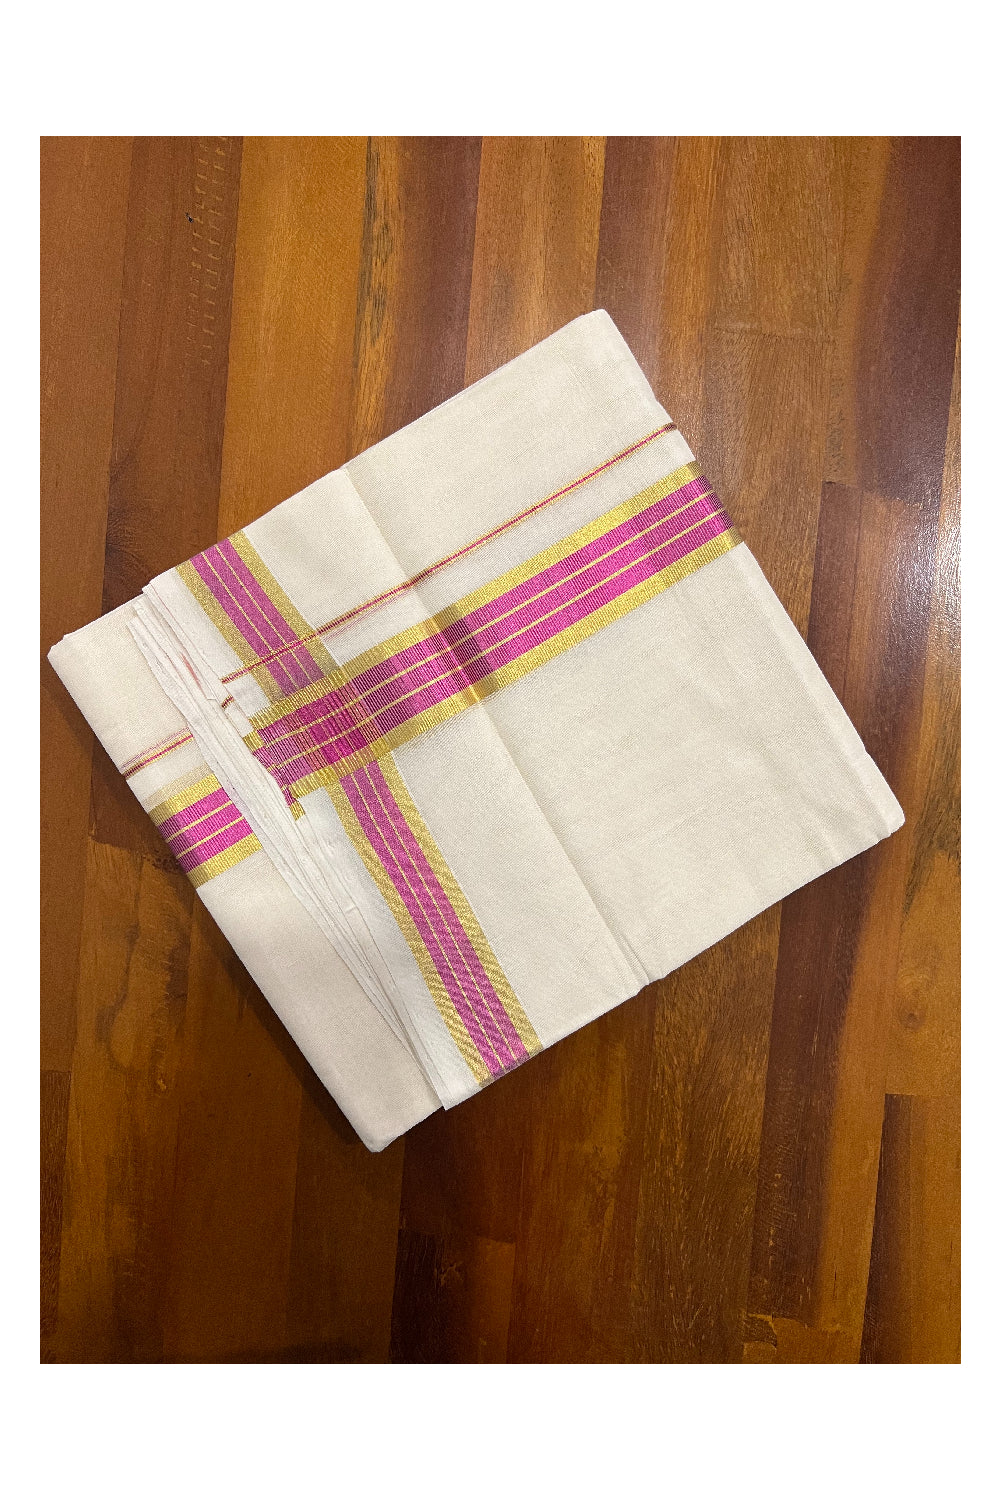 Southloom Balaramapuram Handloom Pure Cotton Mundu with Golden and Pink Kasavu Border (South Indian Dhoti)